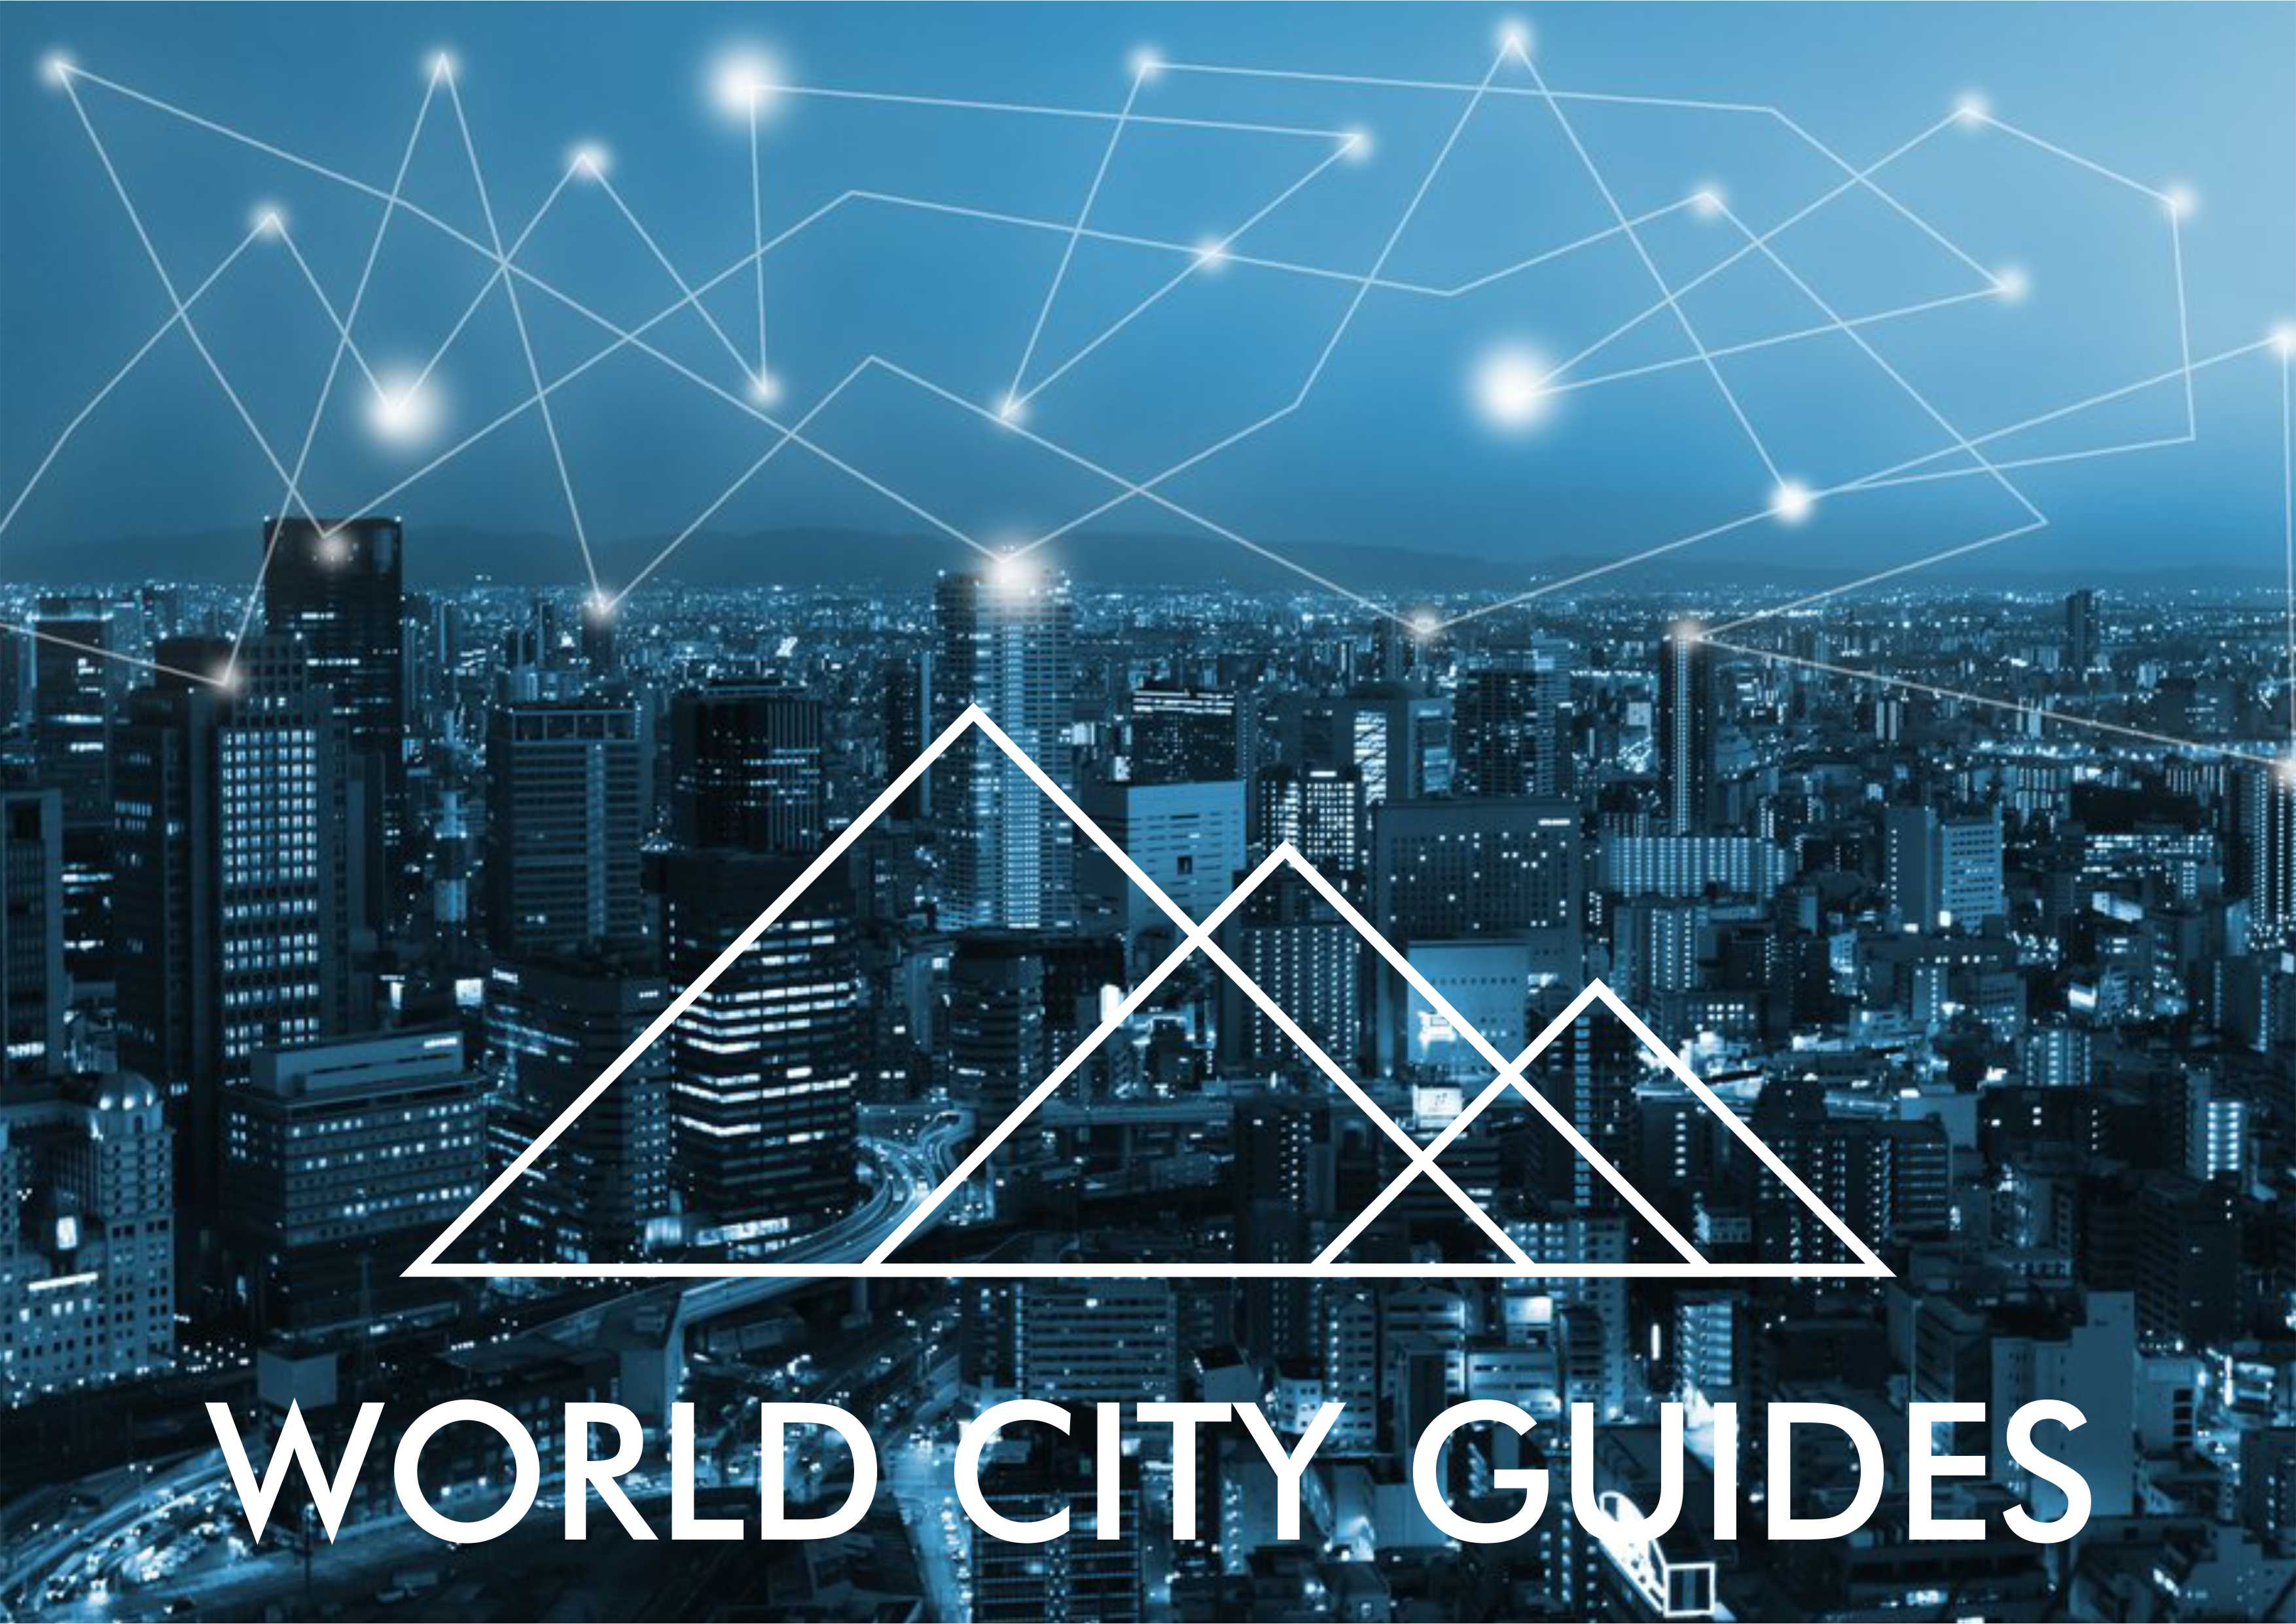 WORLD CITY GUIDES LOGO2.jpg